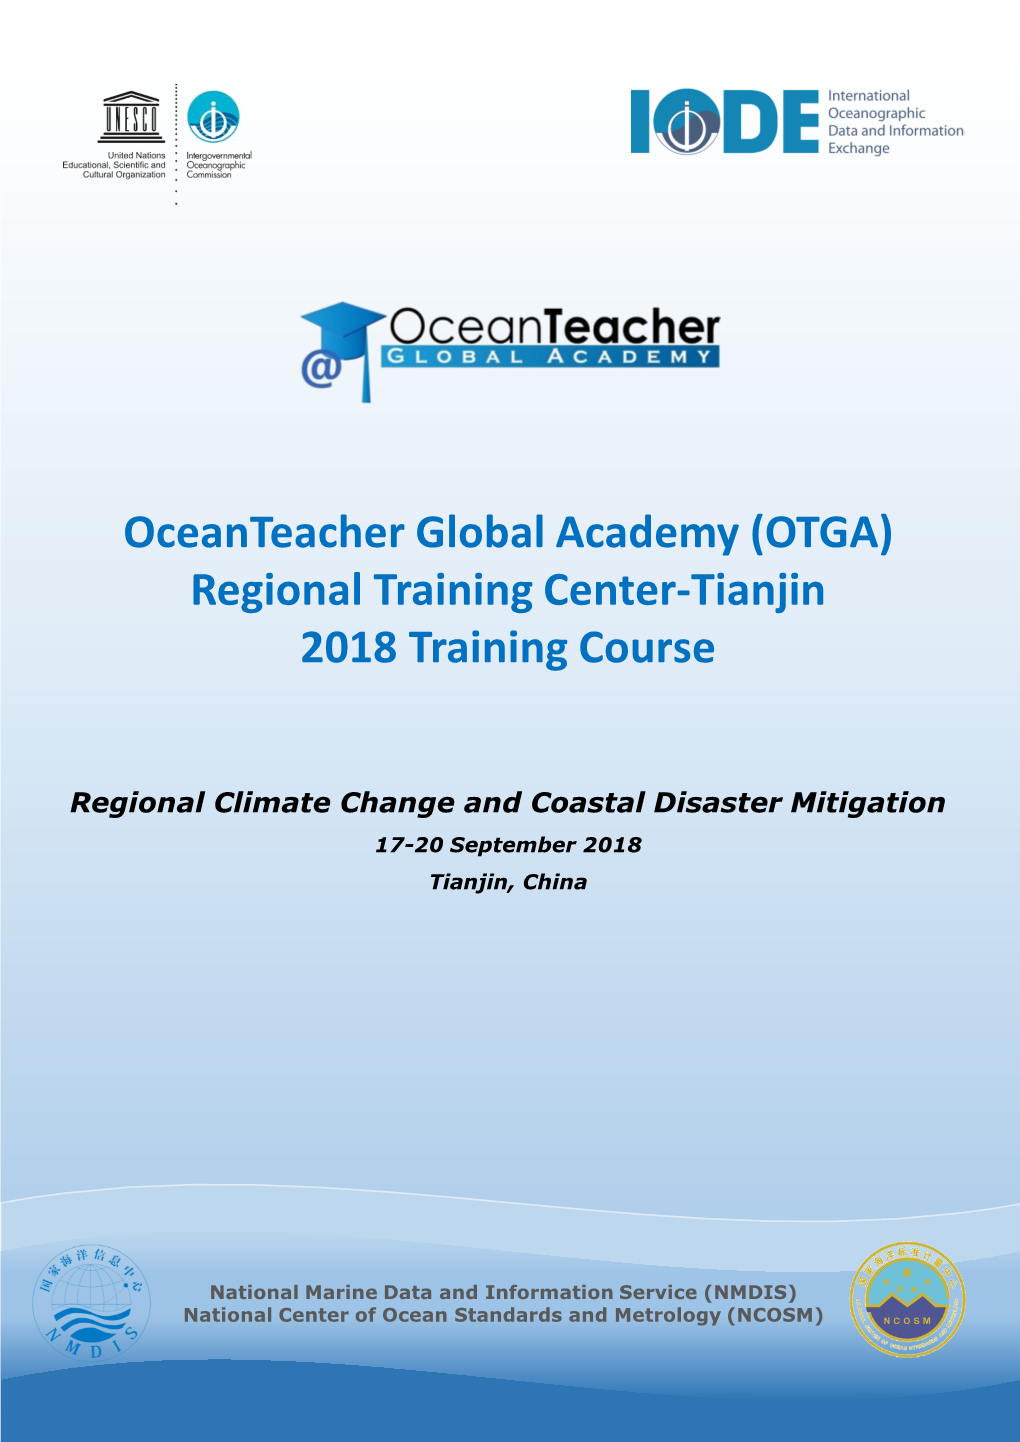 Oceanteacher Global Academy (OTGA) Regional Training Center-Tianjin 2018 Training Course